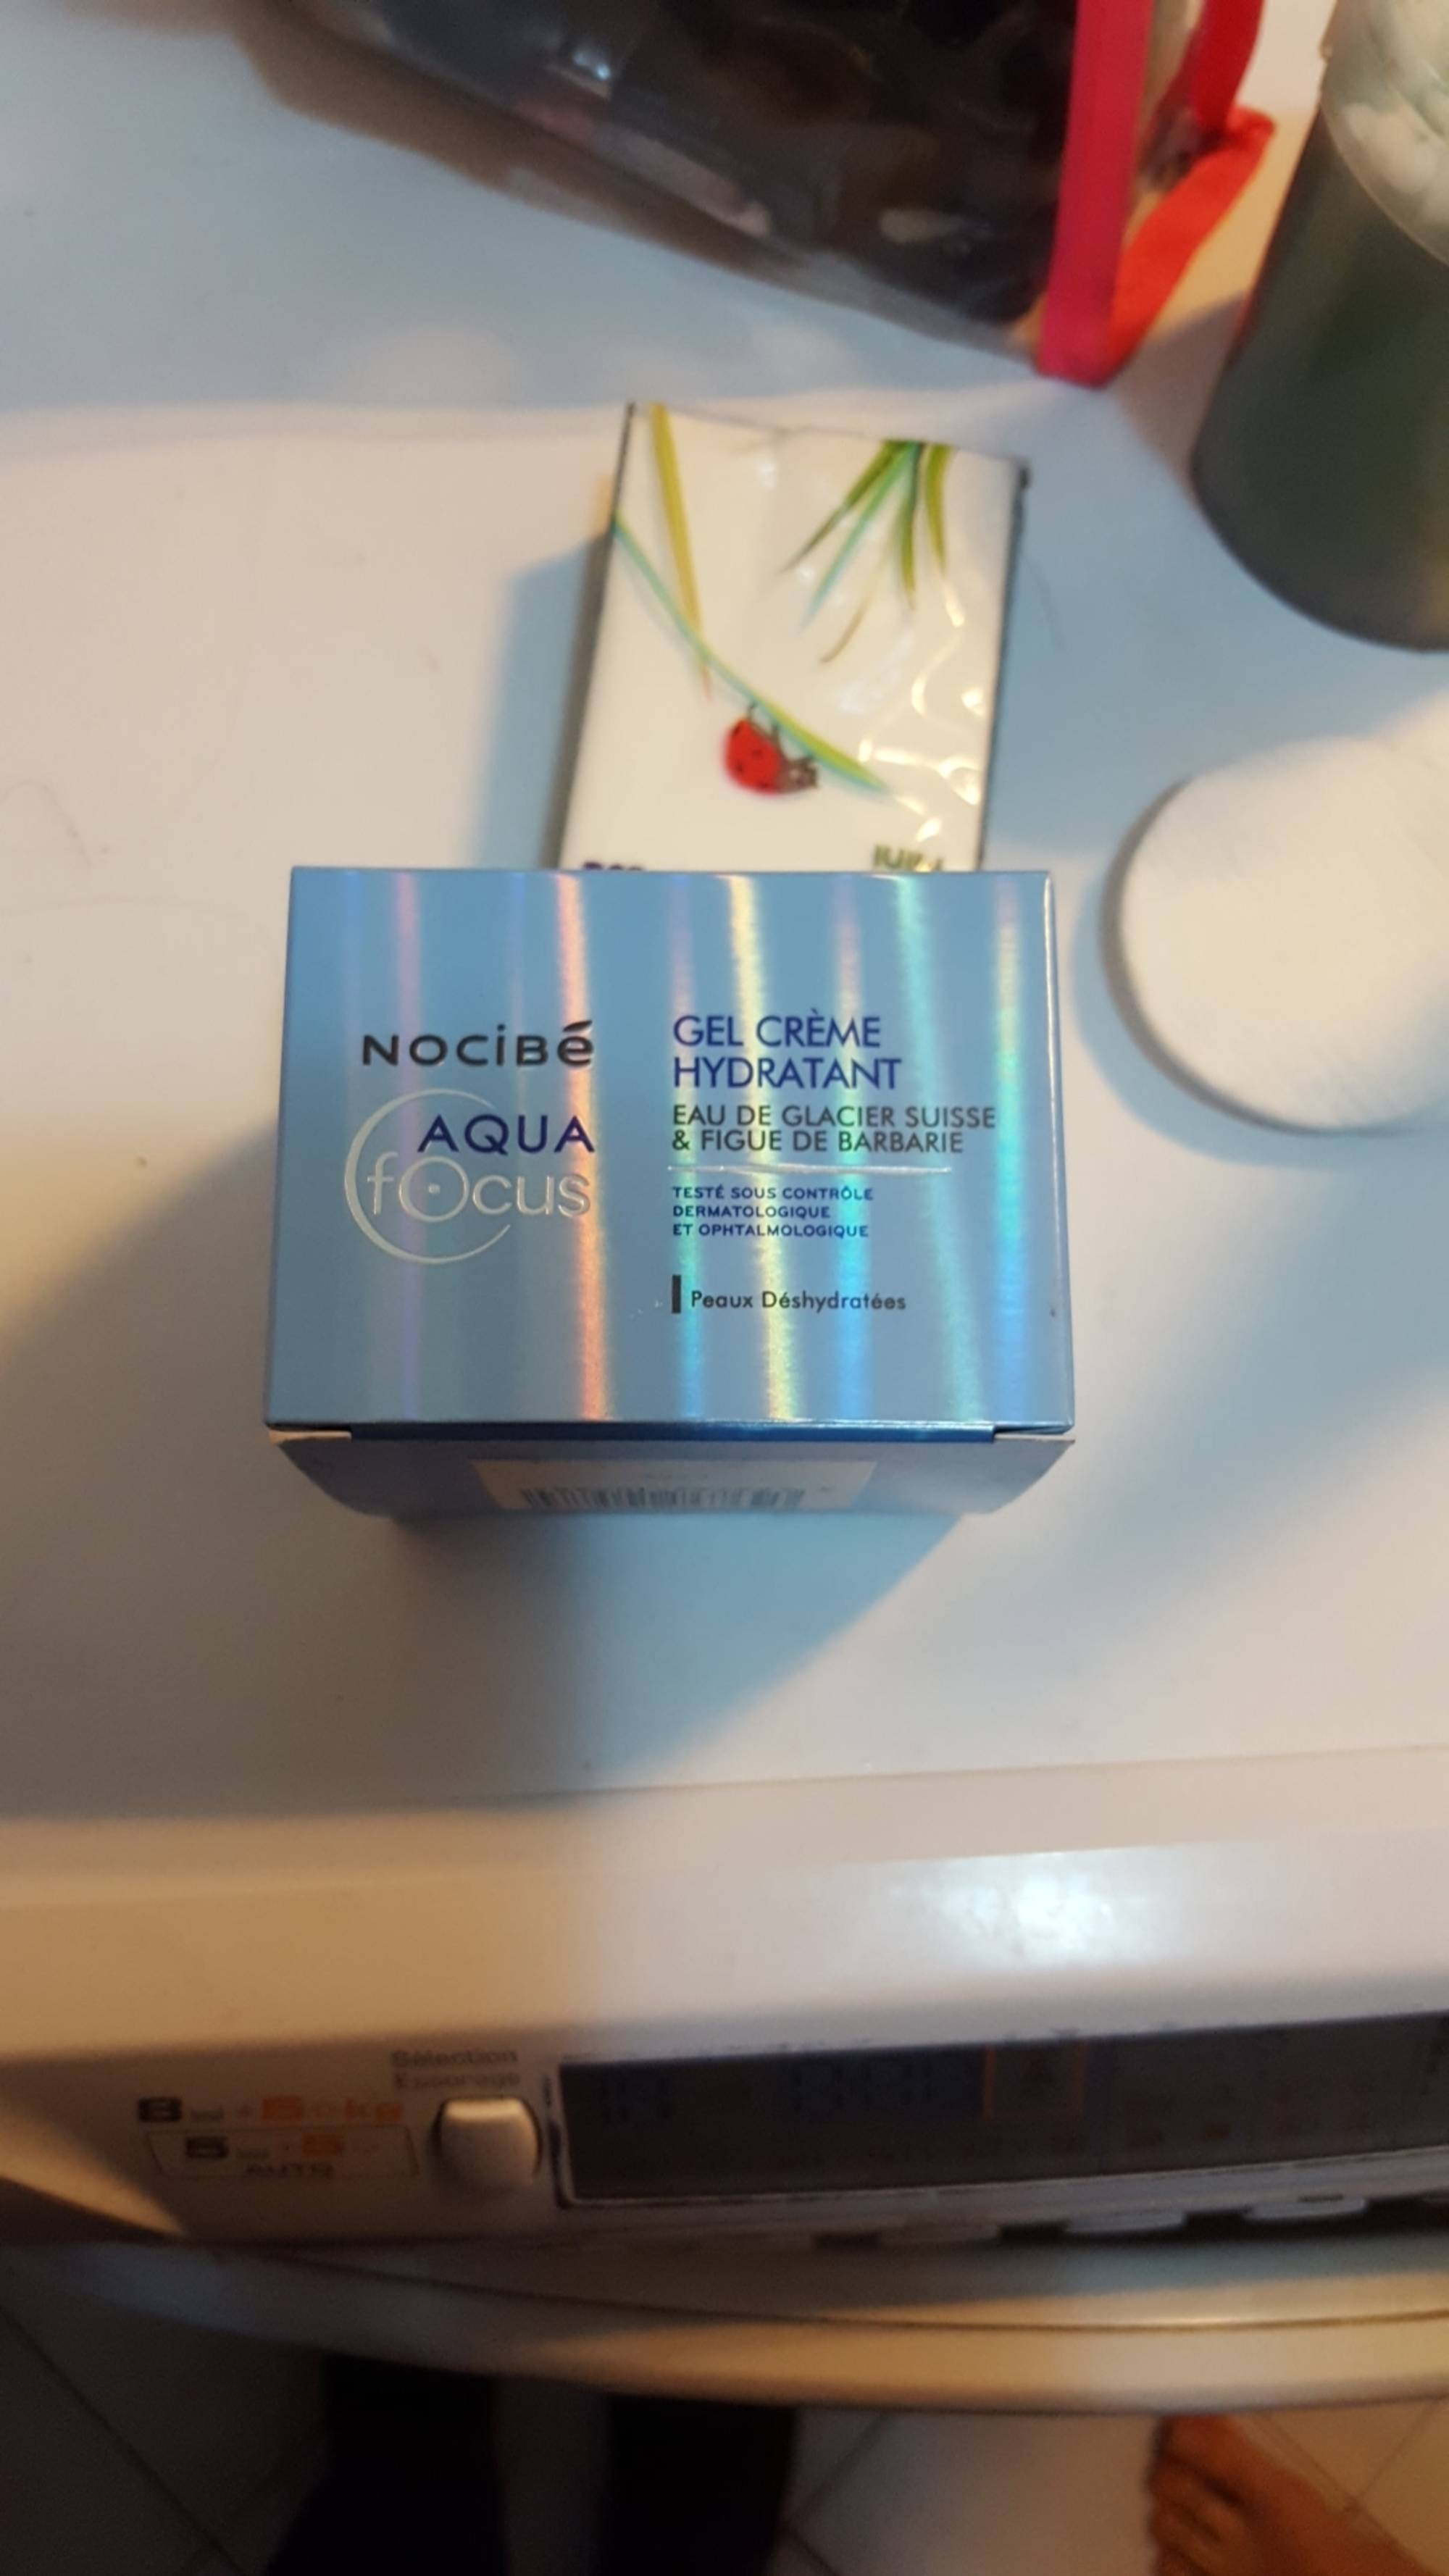 NOCIBÉ - Aqua focus - Gel crème hydratant 